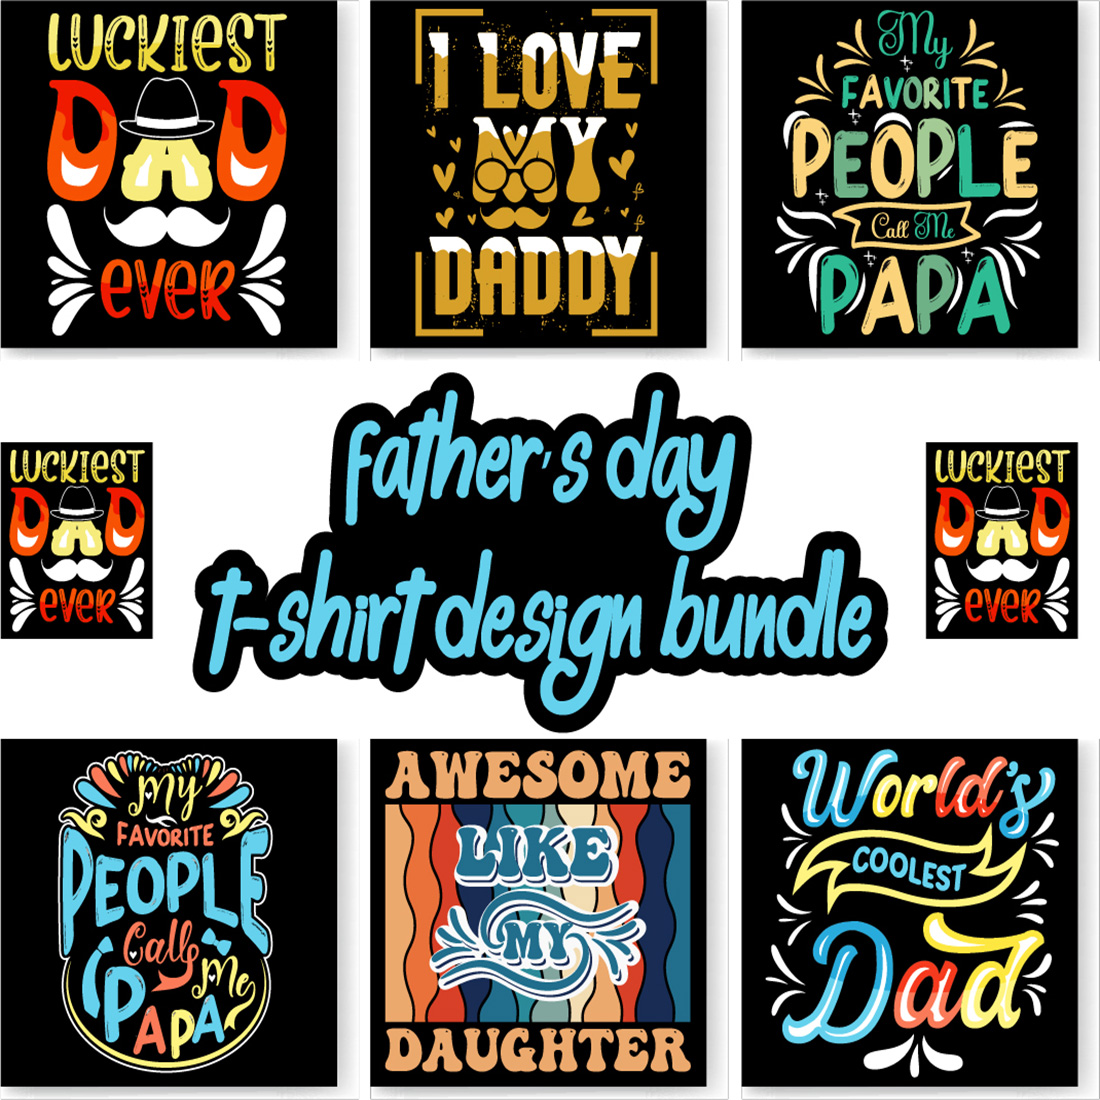 Father's day t-shirt design bundle, Dad t-shirt design, papa t shirt cover image.